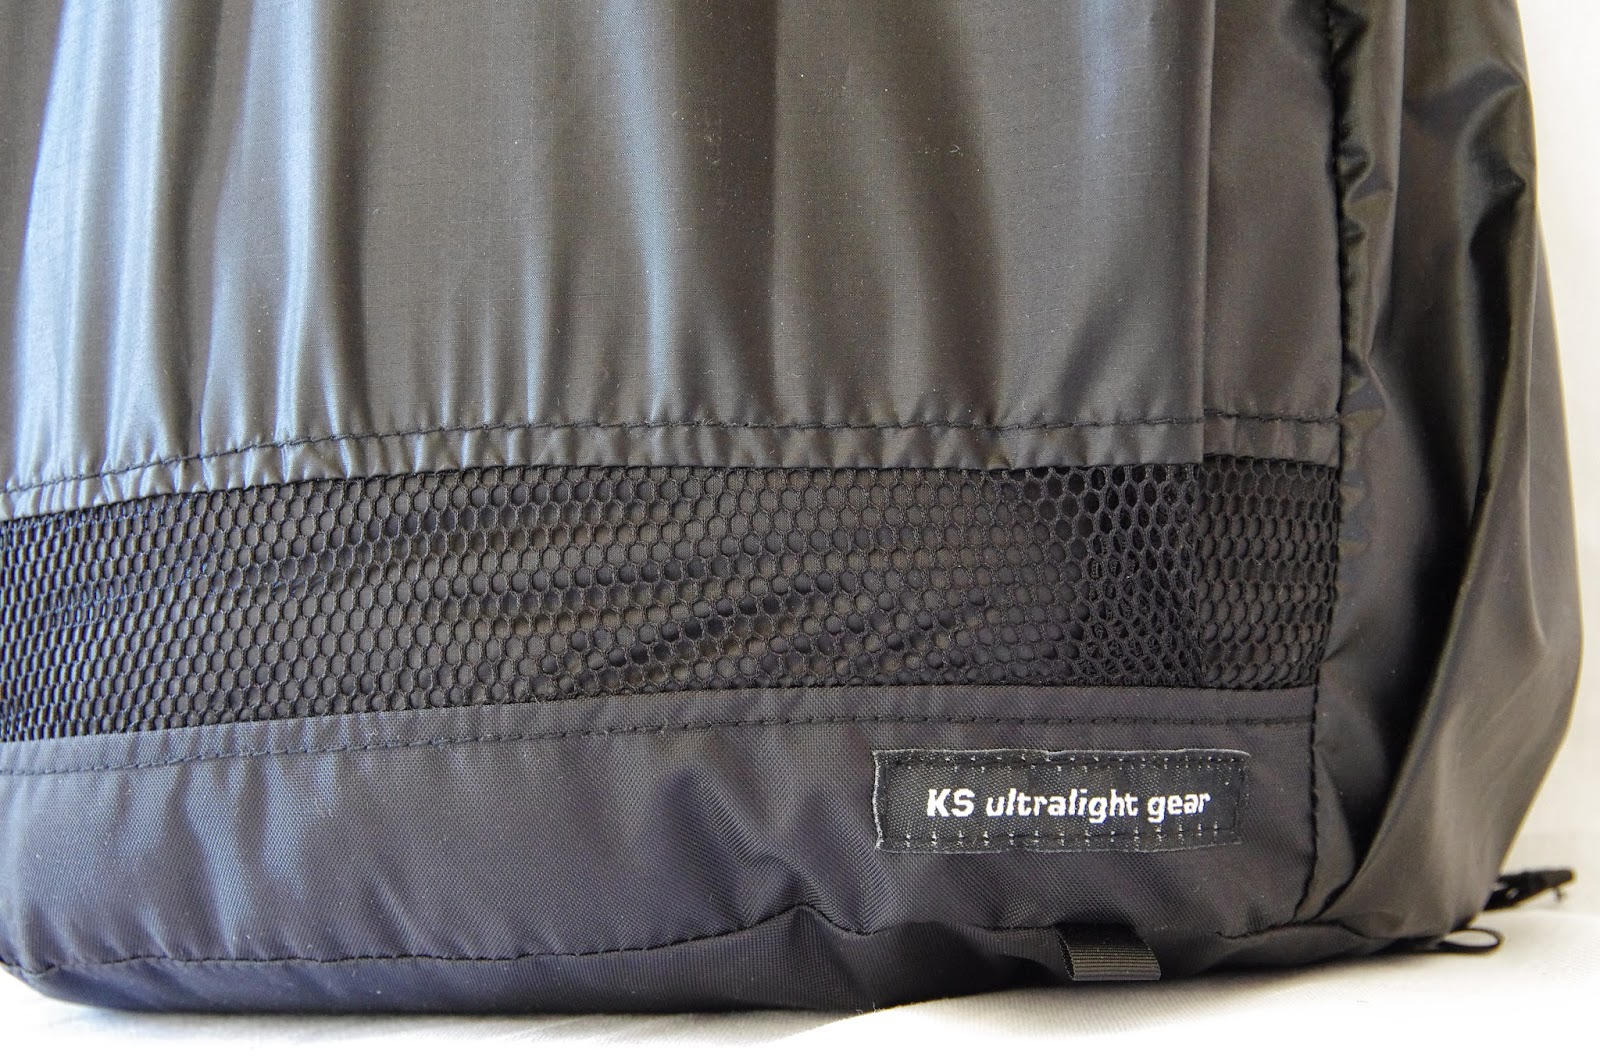 KS ultralight gear: KS 3 / KS 4